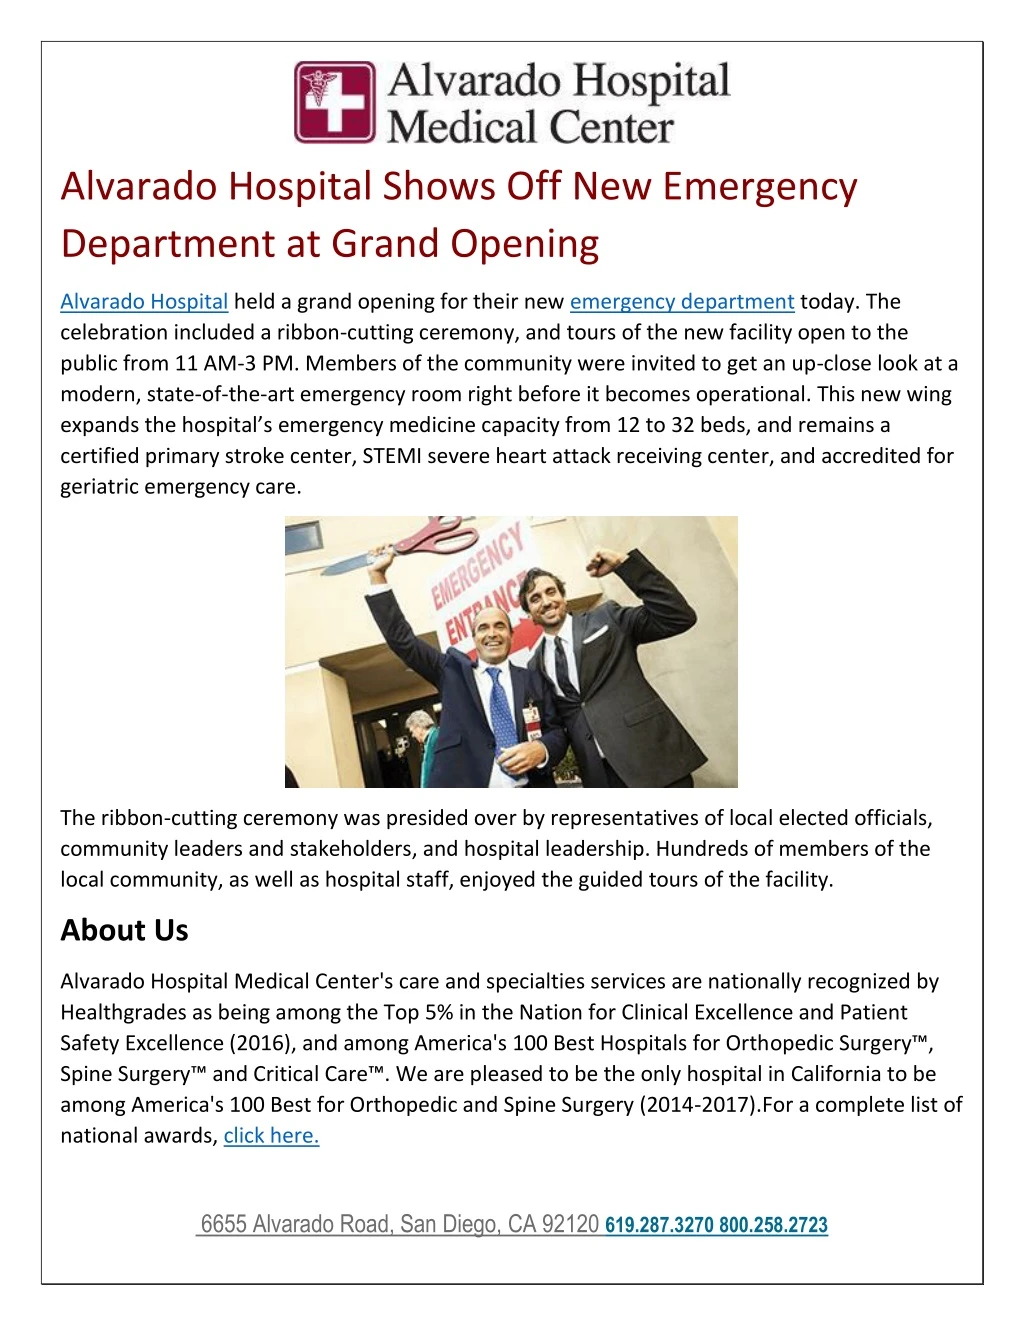 alvarado hospital shows off new emergency